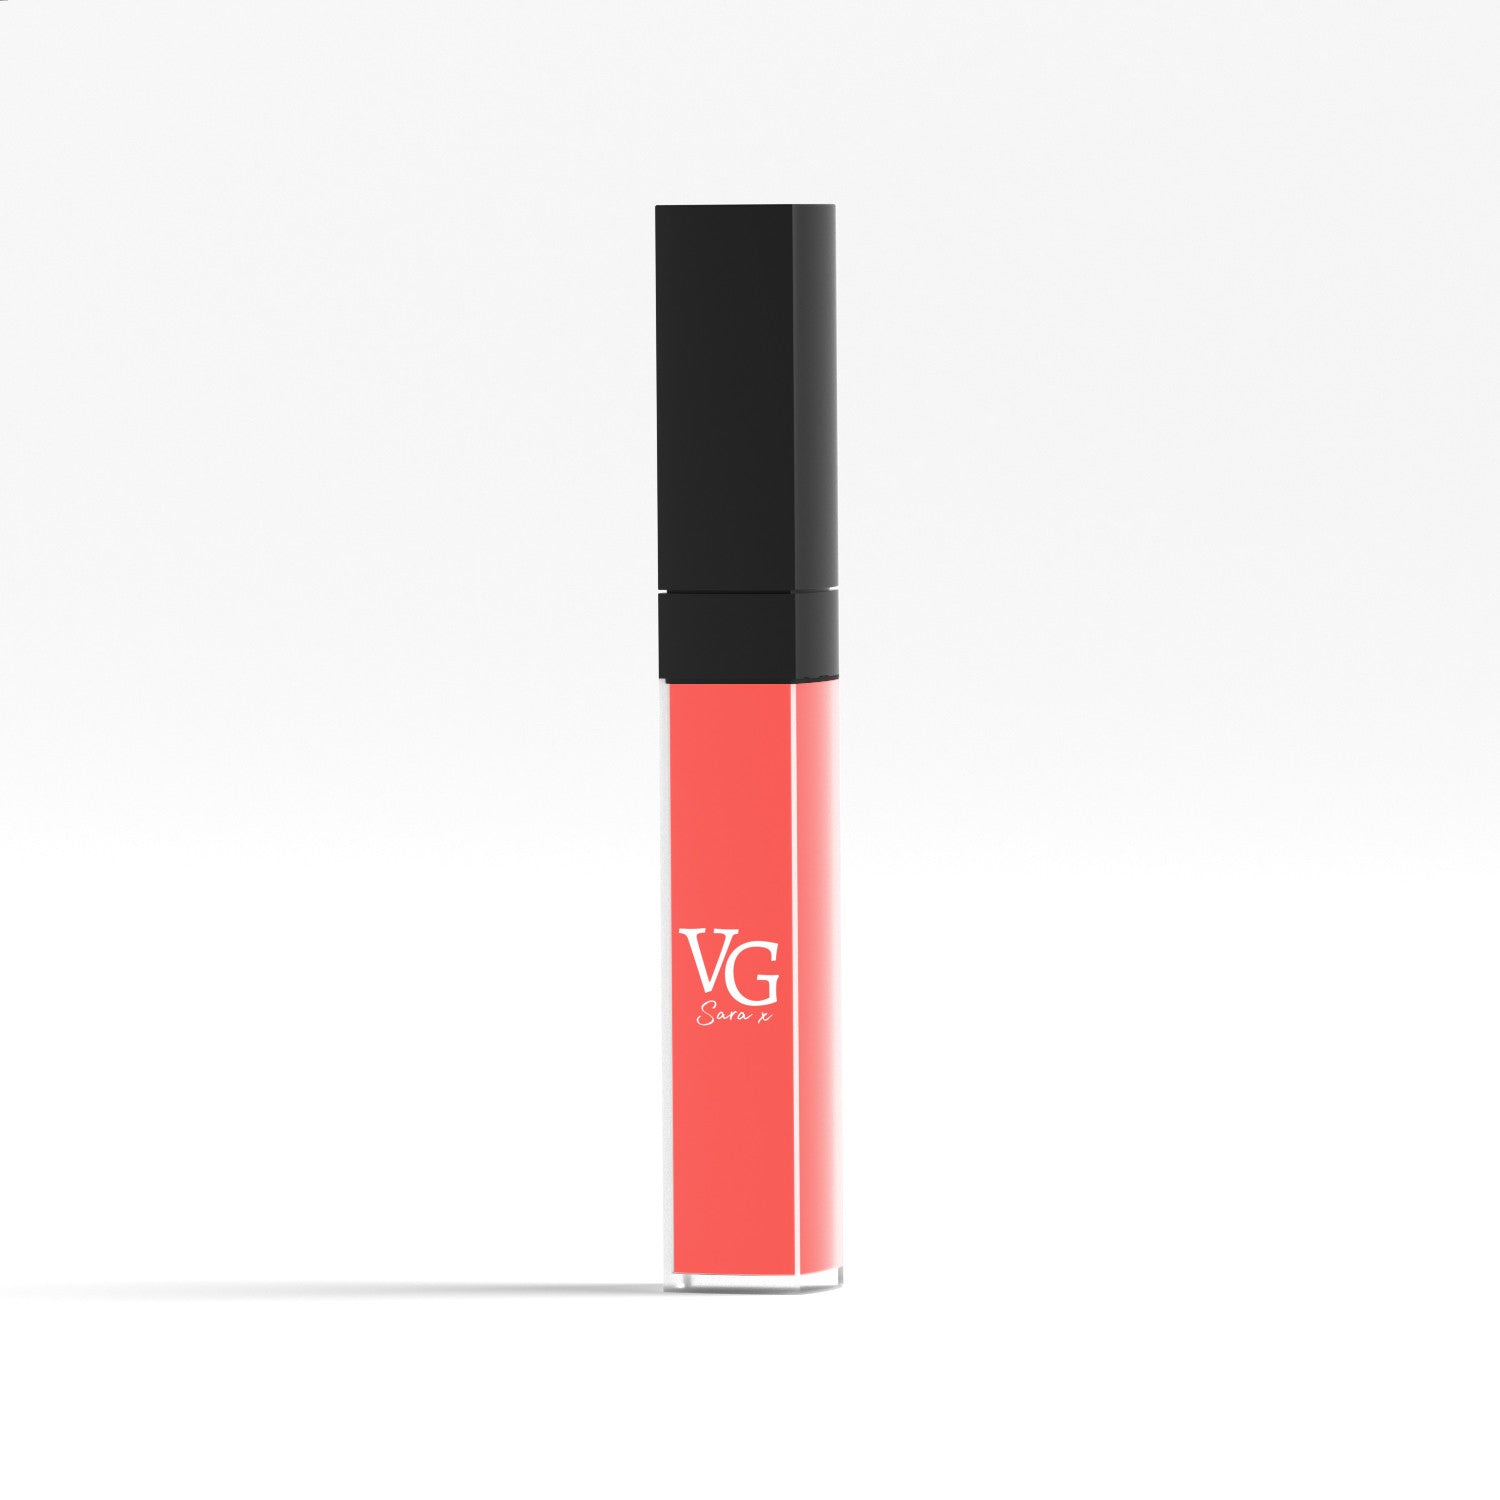 VG vegan lipstick in a classic transparent container 